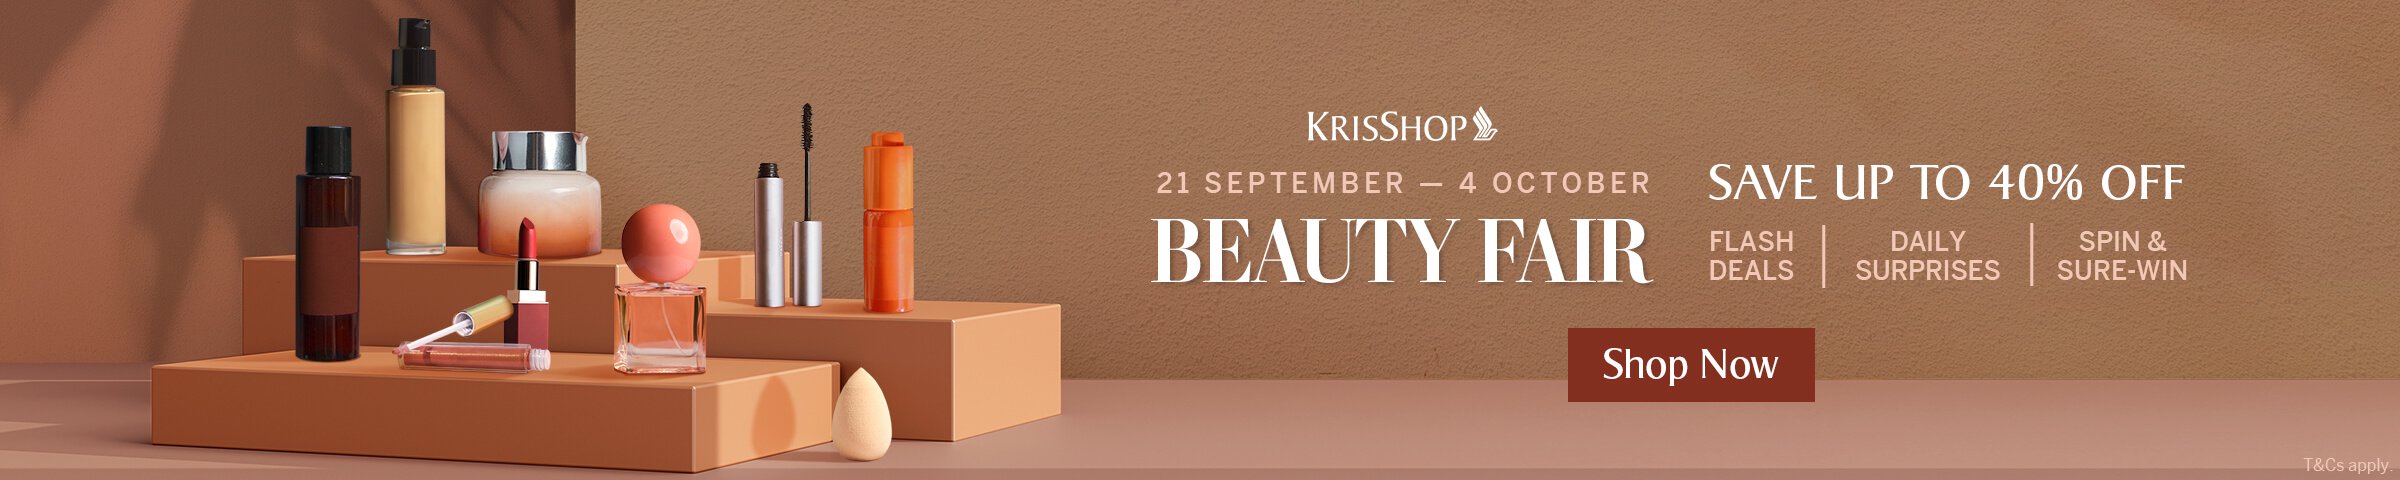 KrisShop Beauty Fair